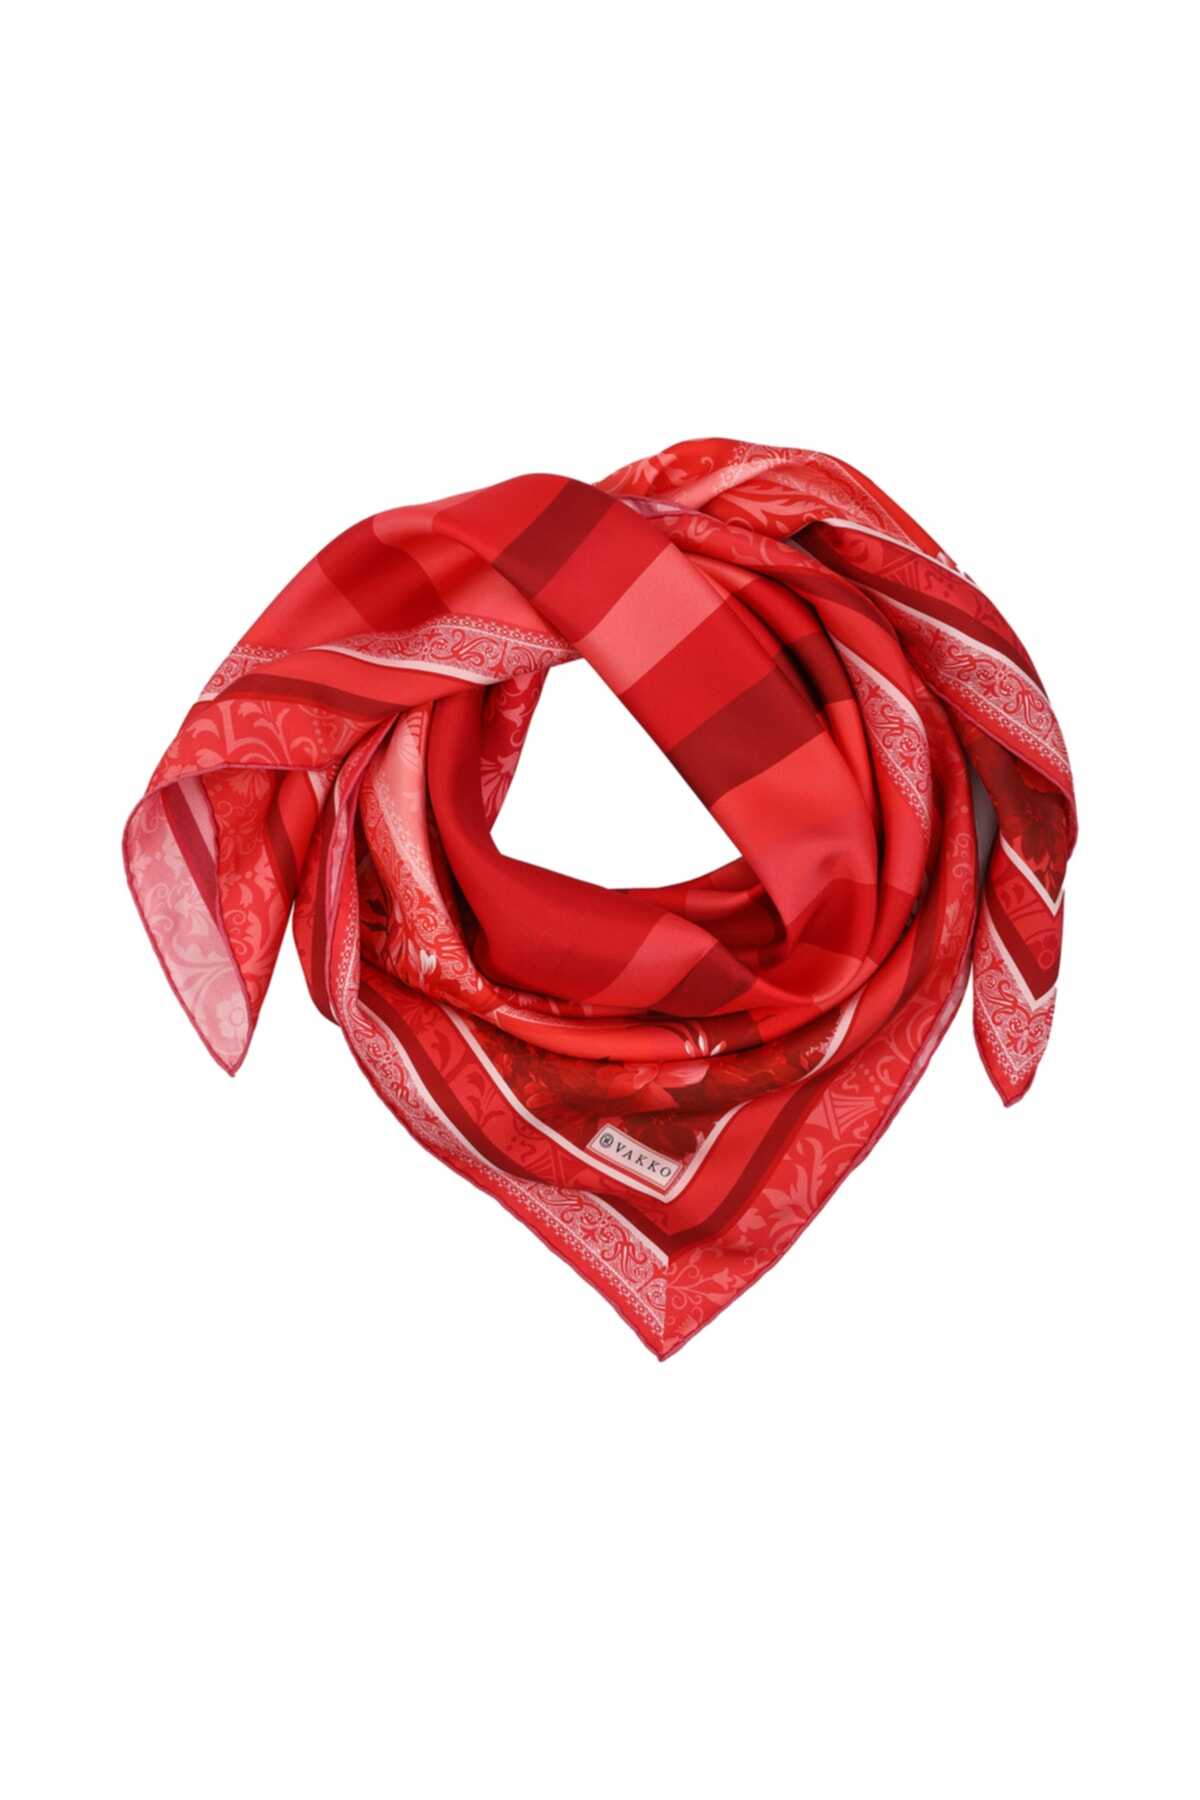 روسری ابریشم طرح گل قرمز برند Vakko